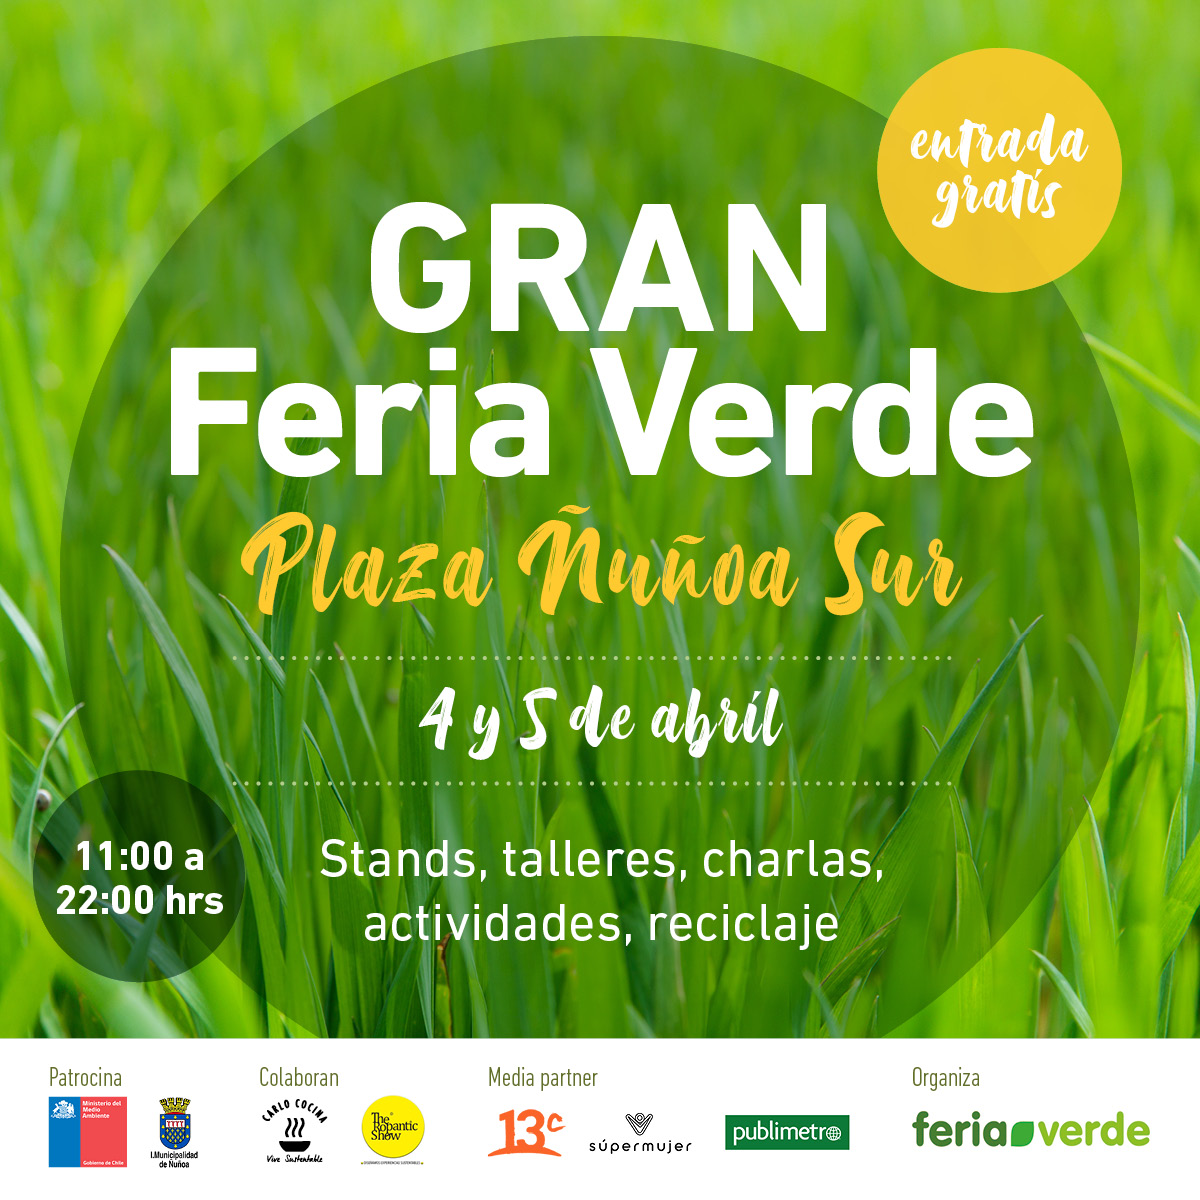  Llega Gran Feria Verde en Plaza Ñuñoa Sur